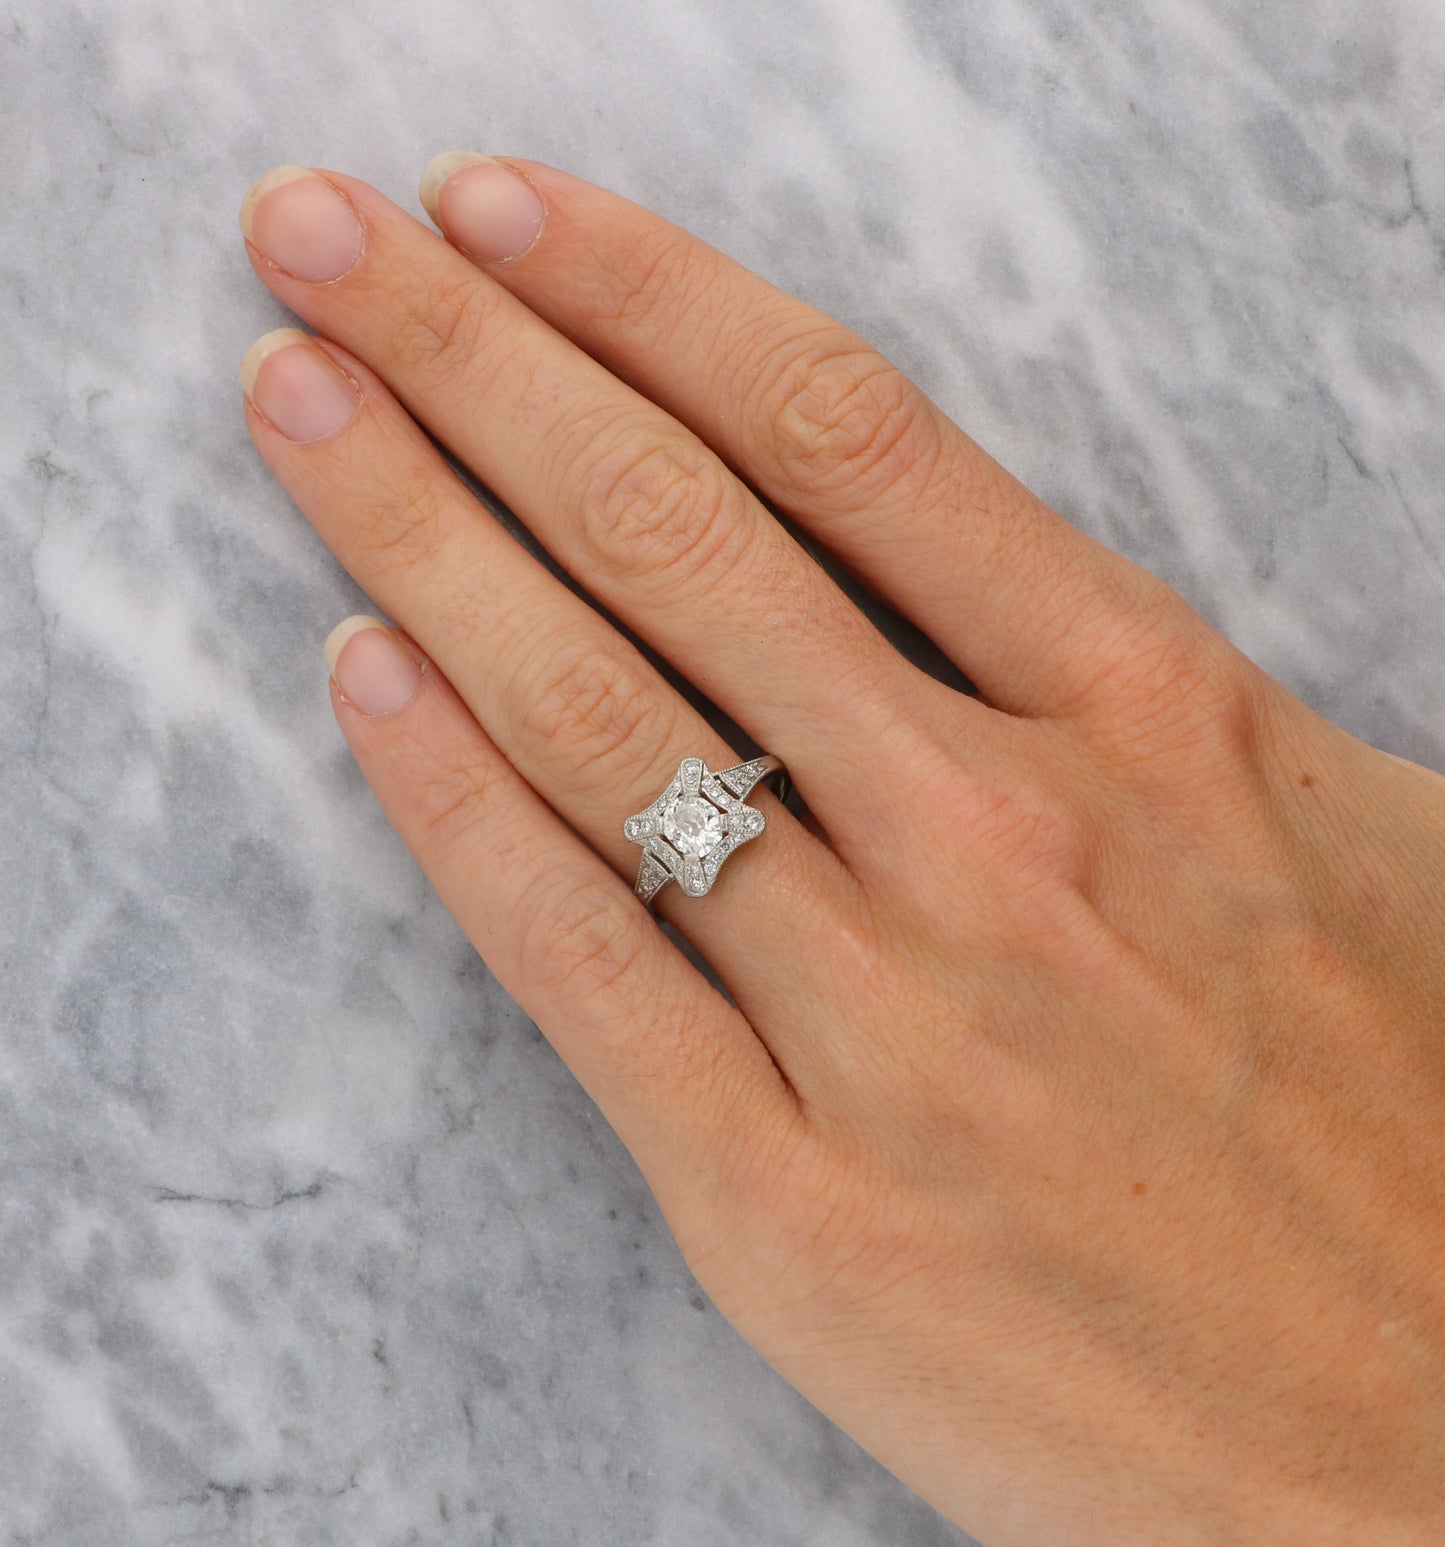 Platinum old cut diamond Art Deco style engagement ring